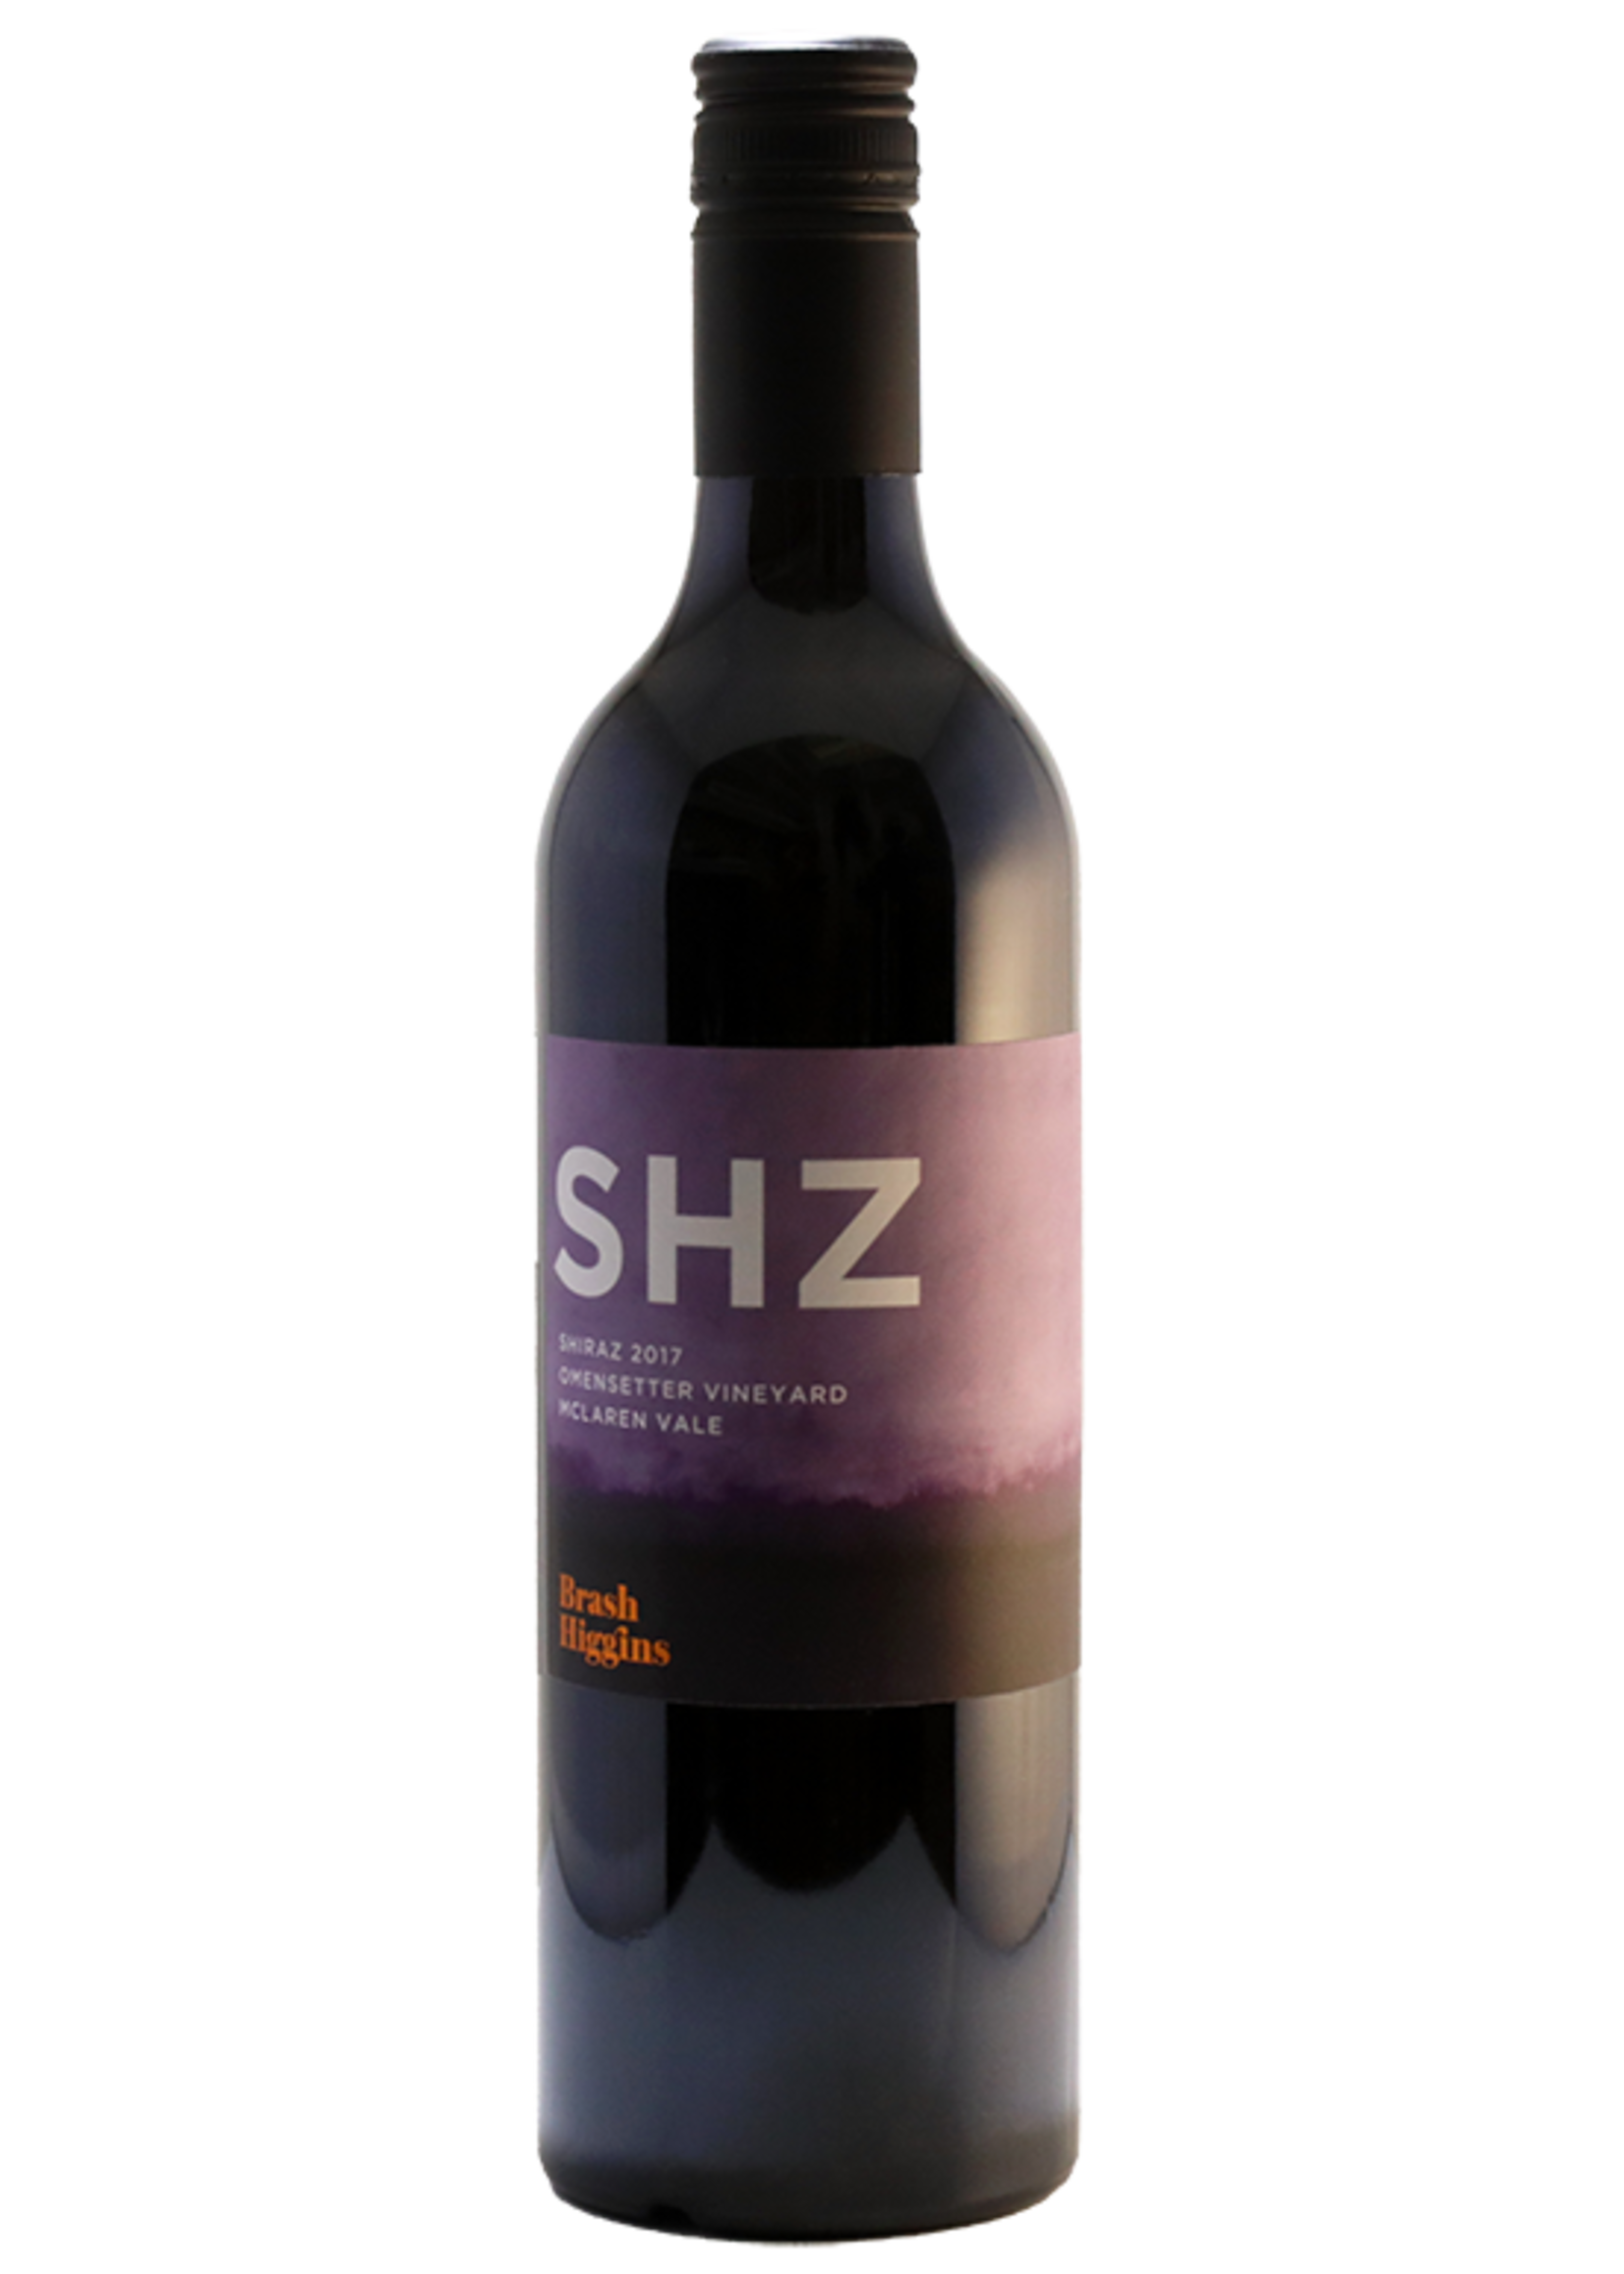 Shiraz "SHZ" McClaren Vale 2017 Brash Higgins